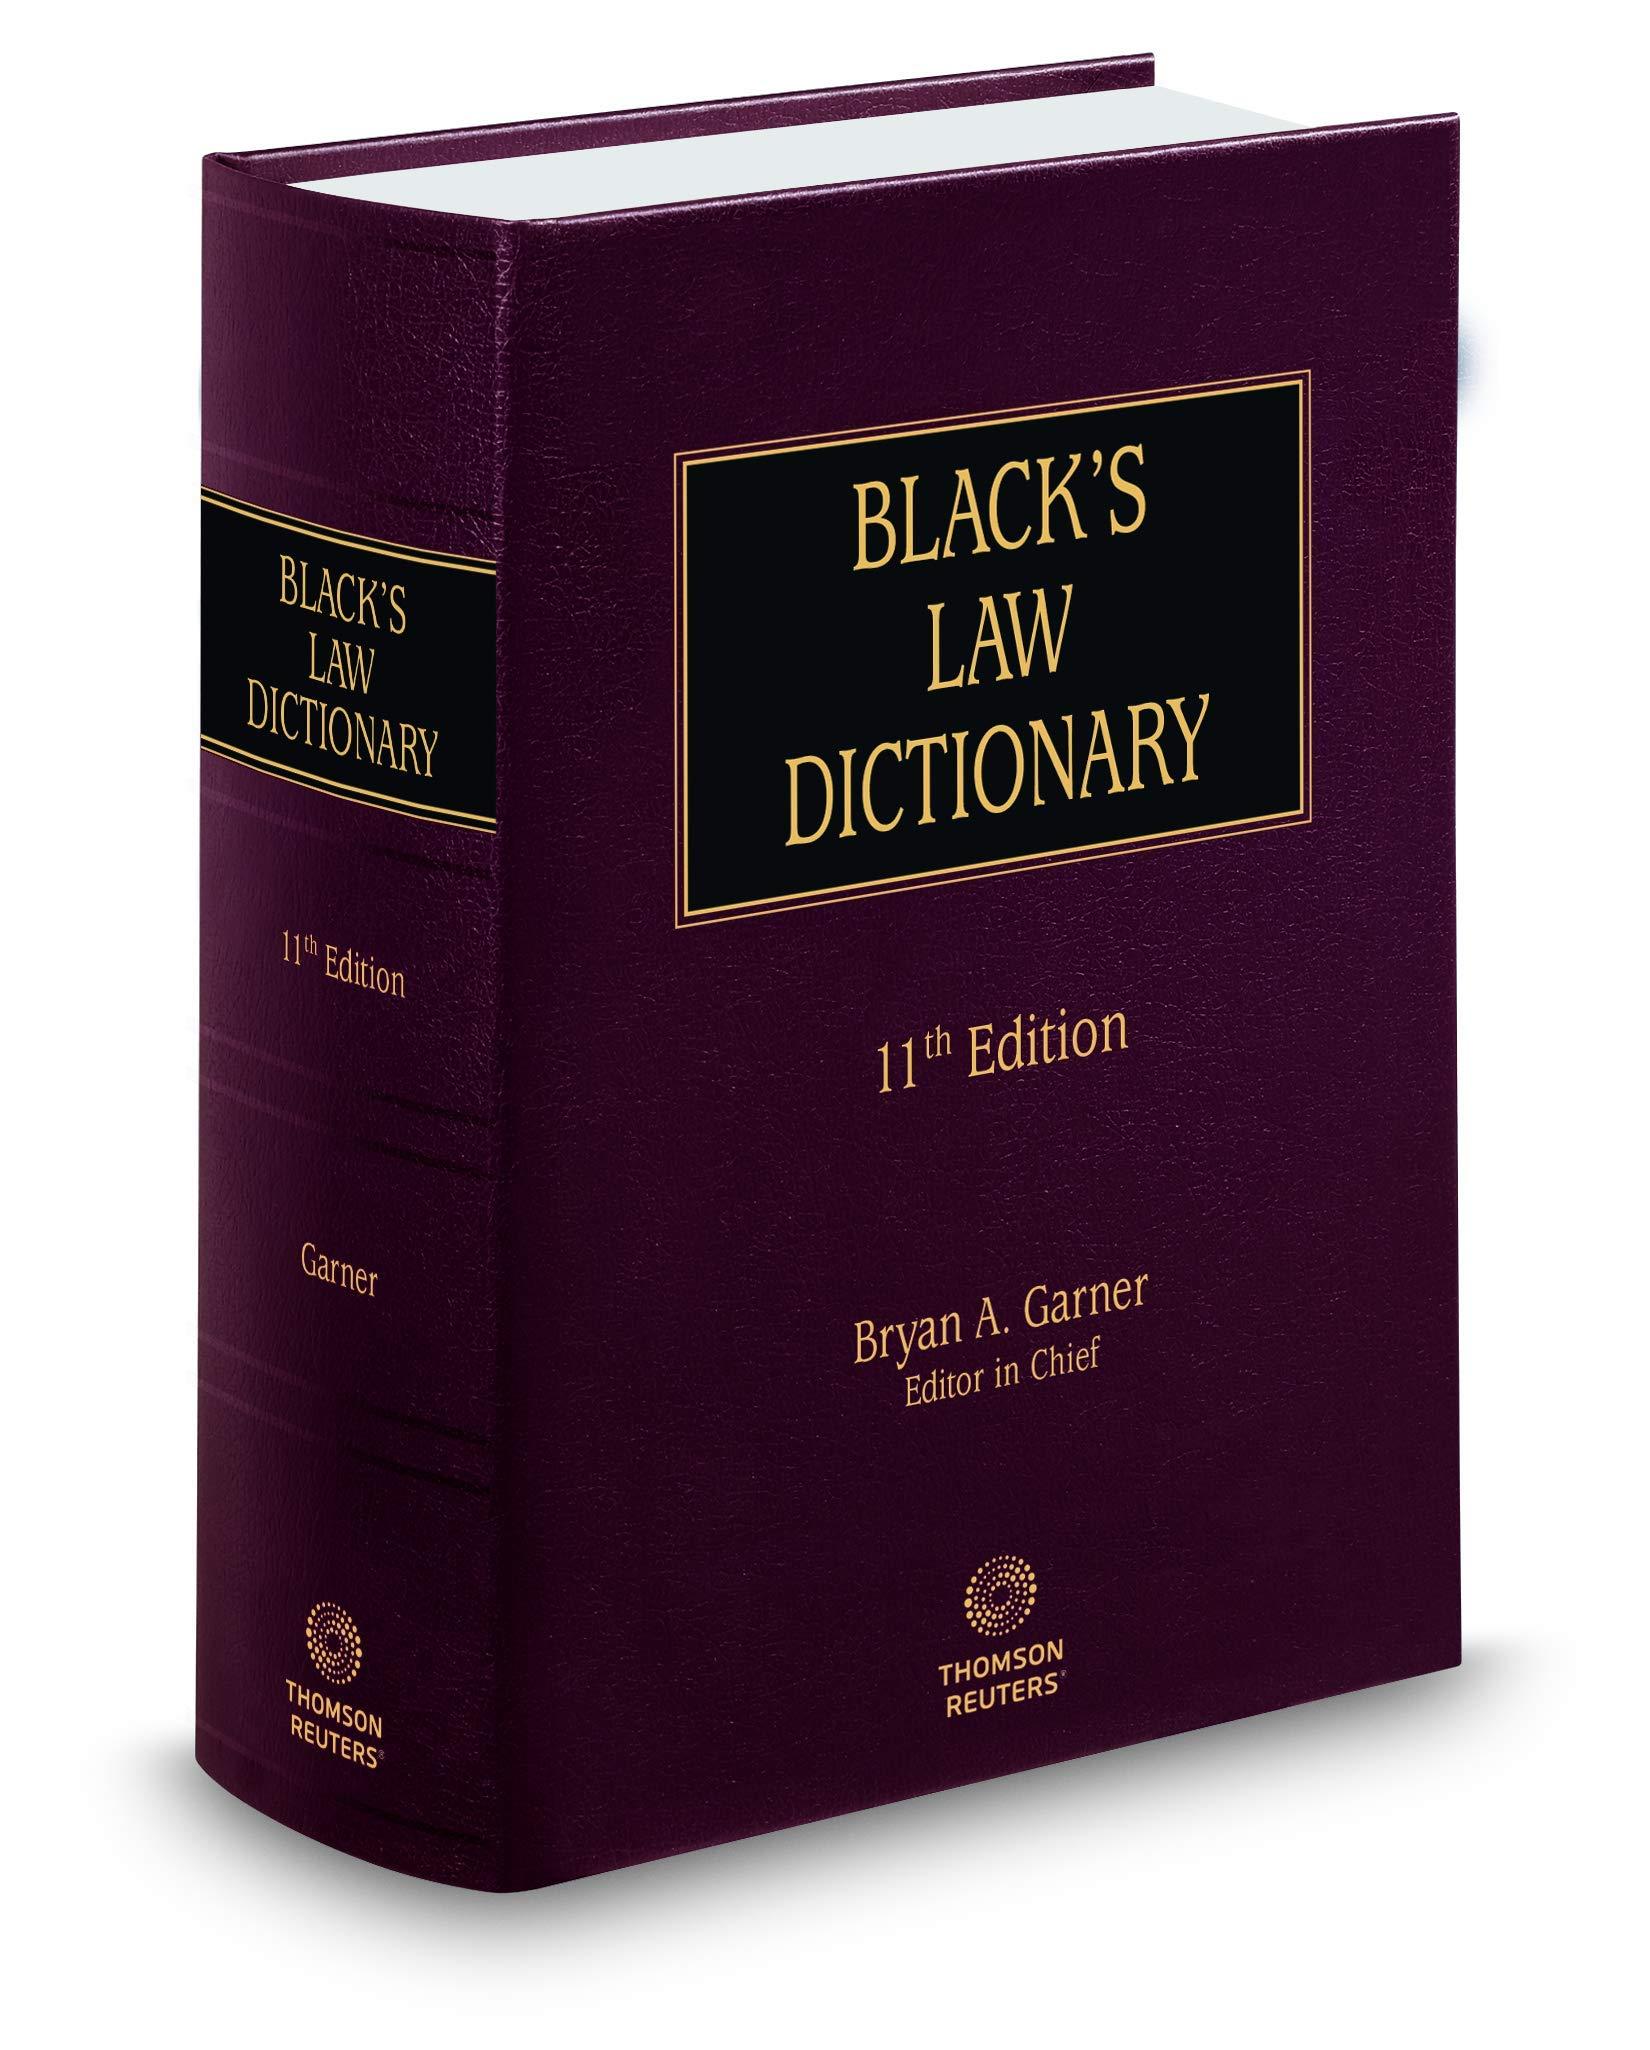 blacks law dictionary 11th edition pdf free download